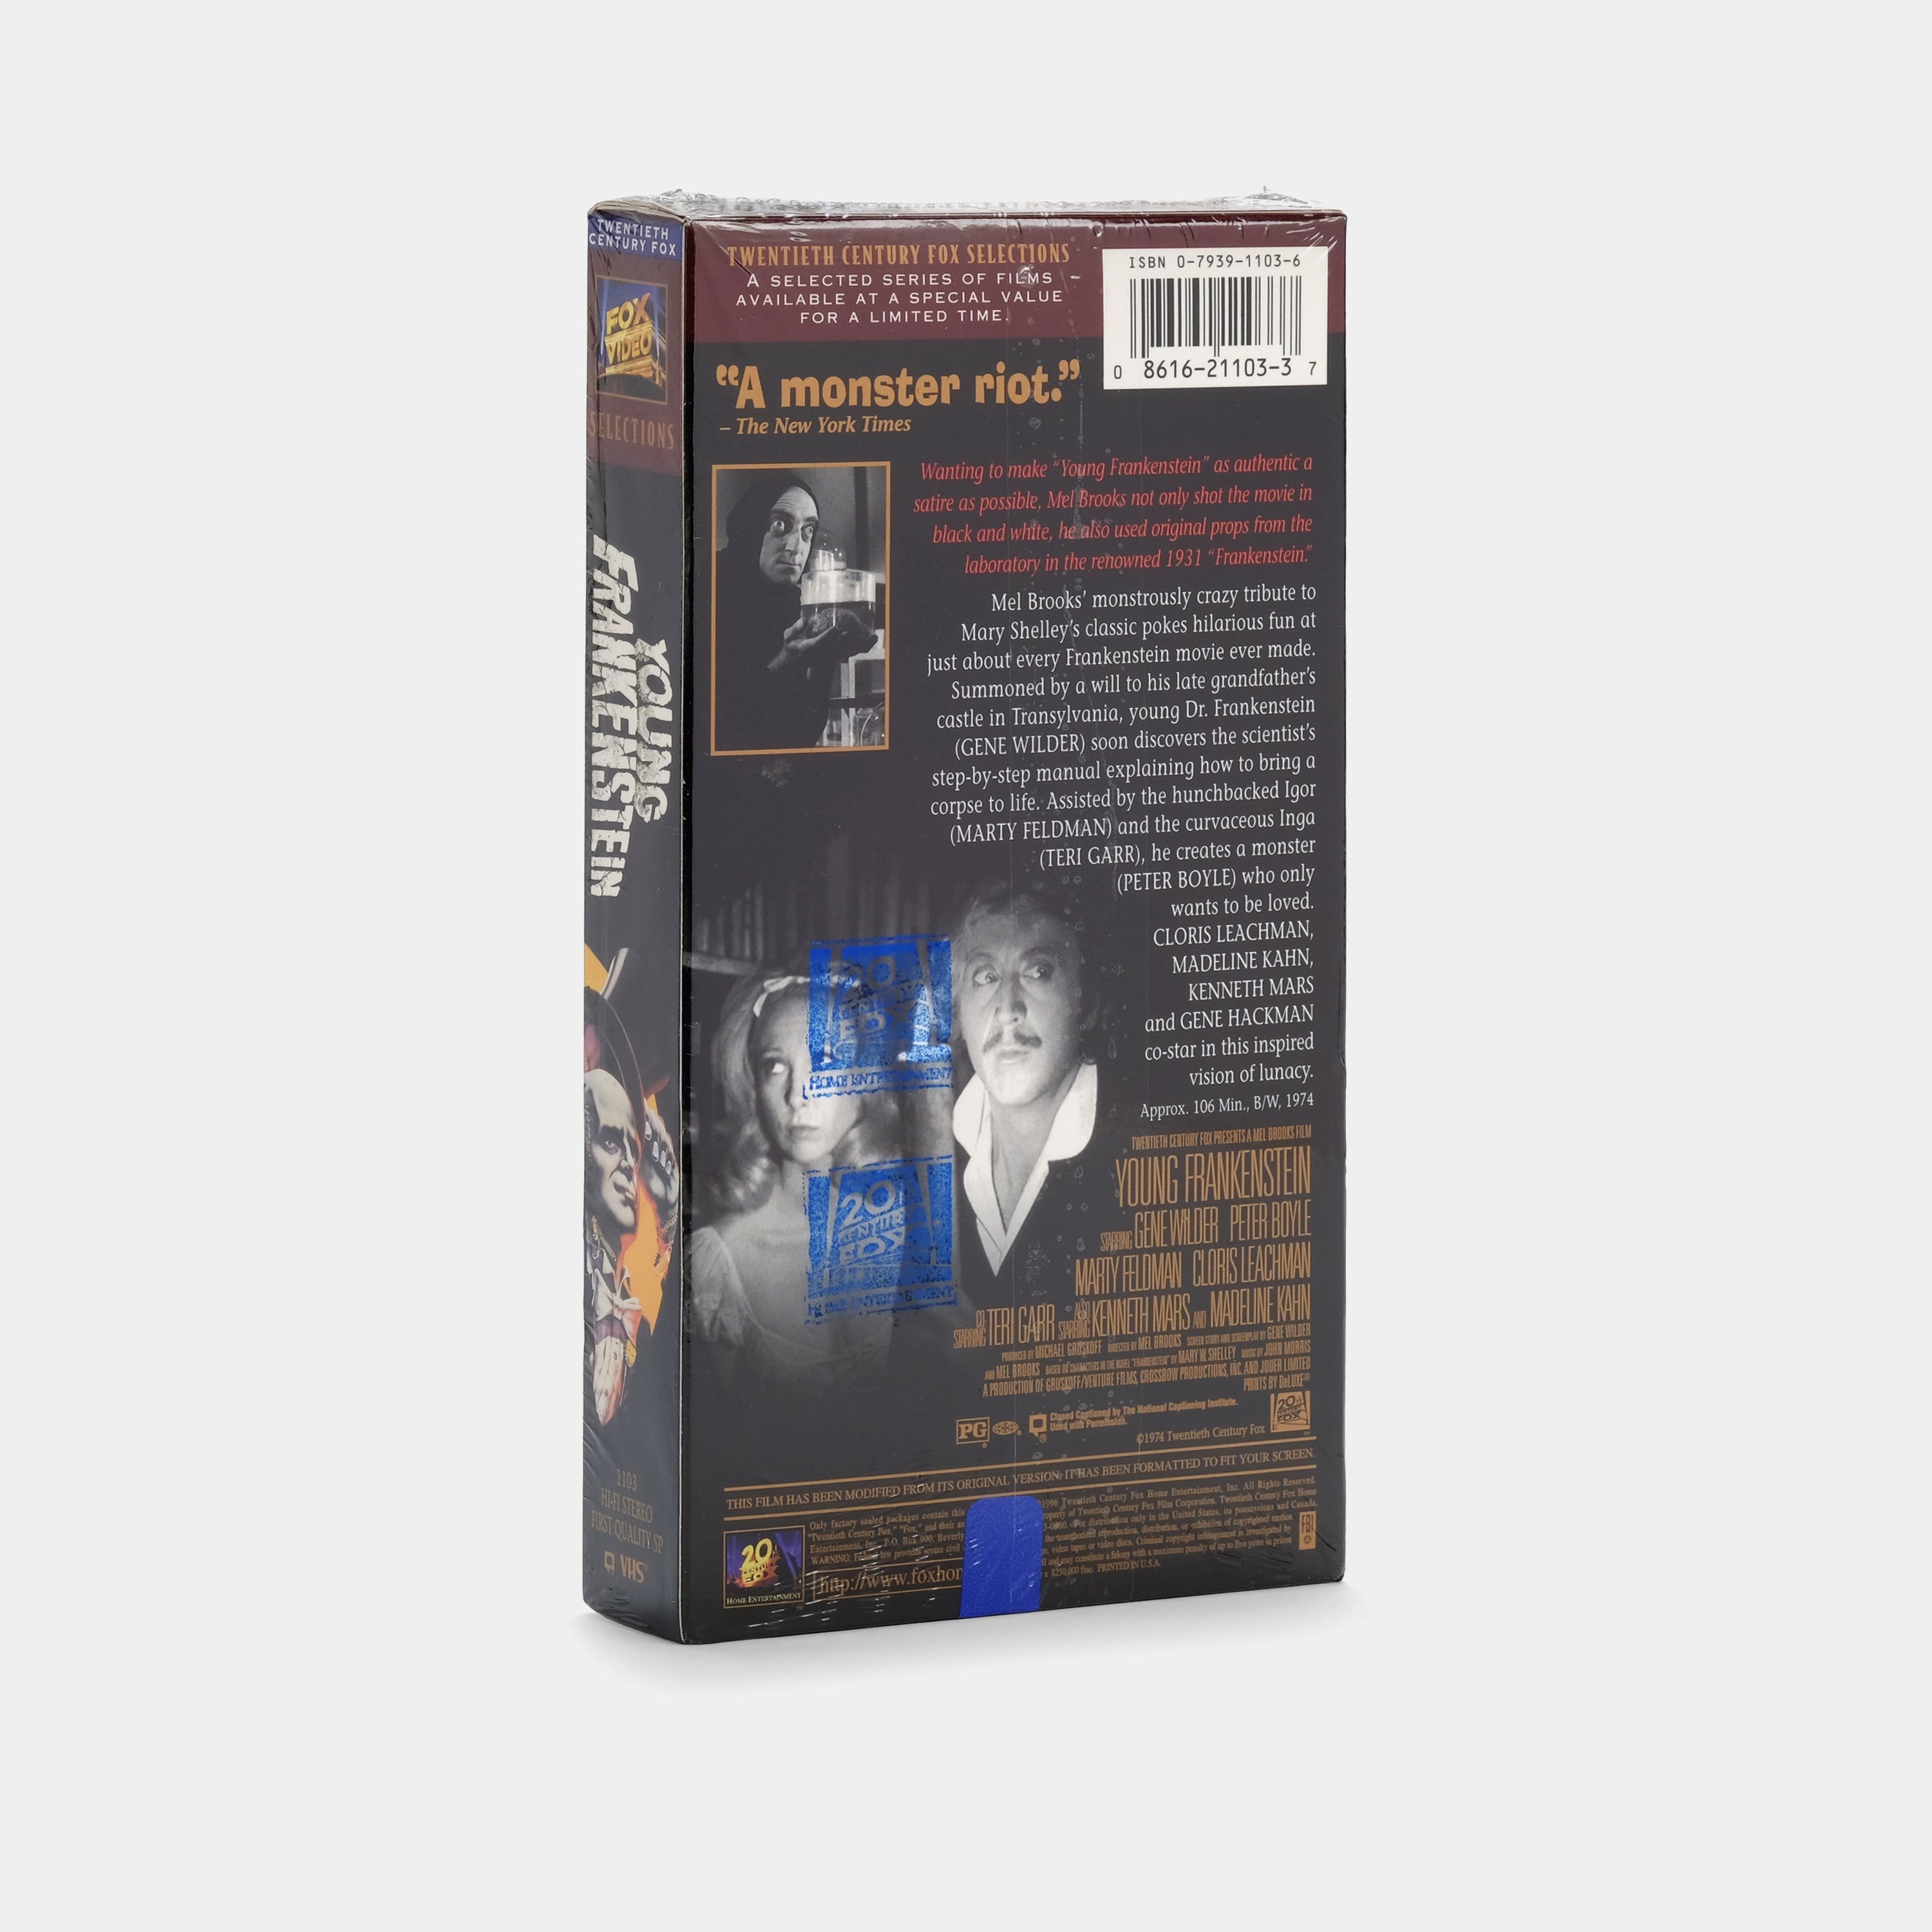 Young Frankenstein (Sealed) VHS Tape